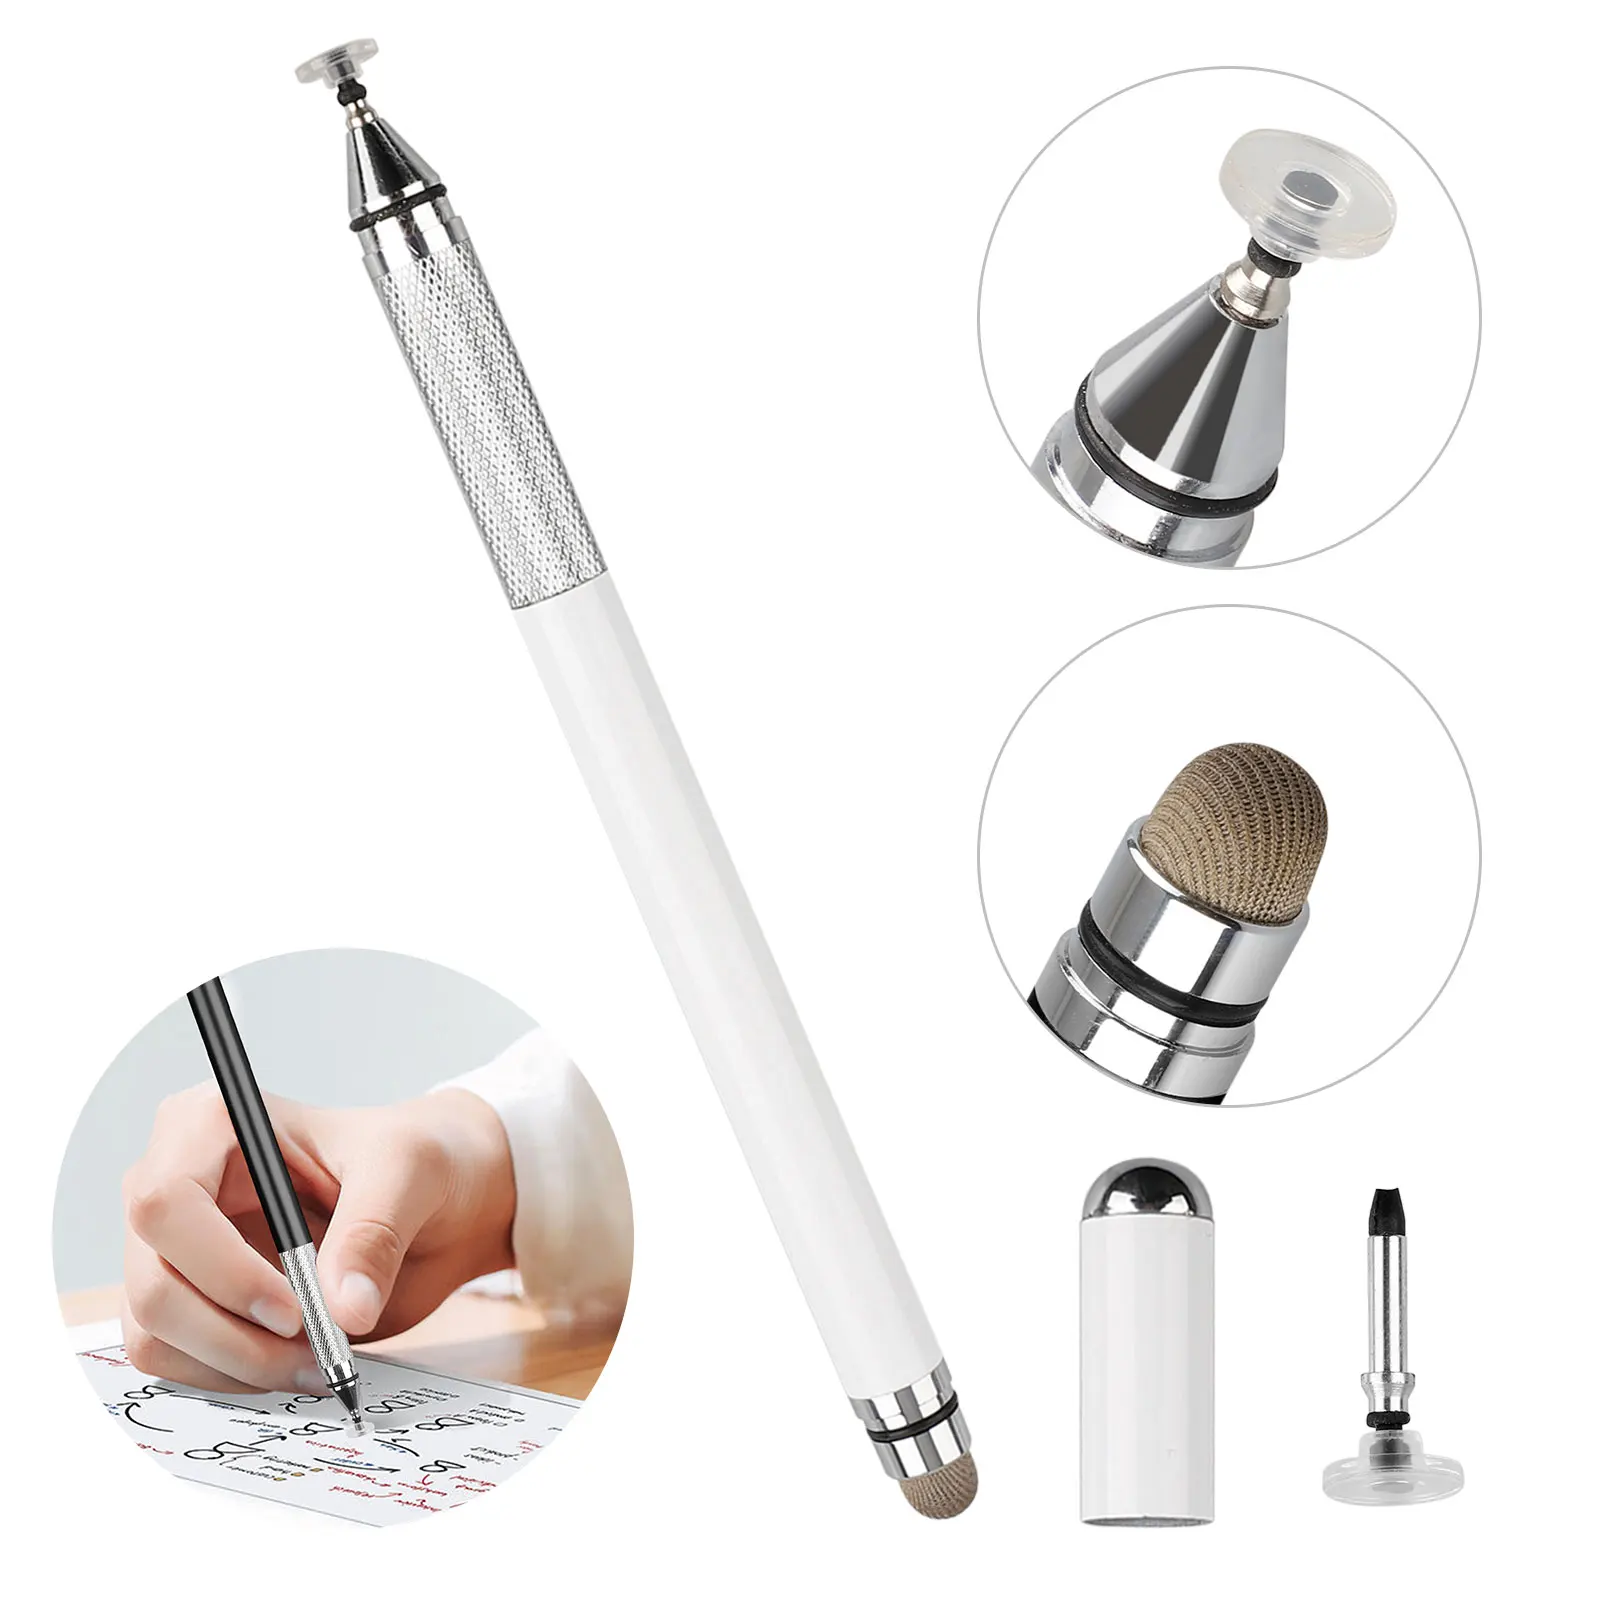 

Universal Capacitive Stylus Pen 2 in 1 Disc Fiber Tip Precision High Sensitivity Fine Point Tip Stylus Pen for Tablet Smartpho